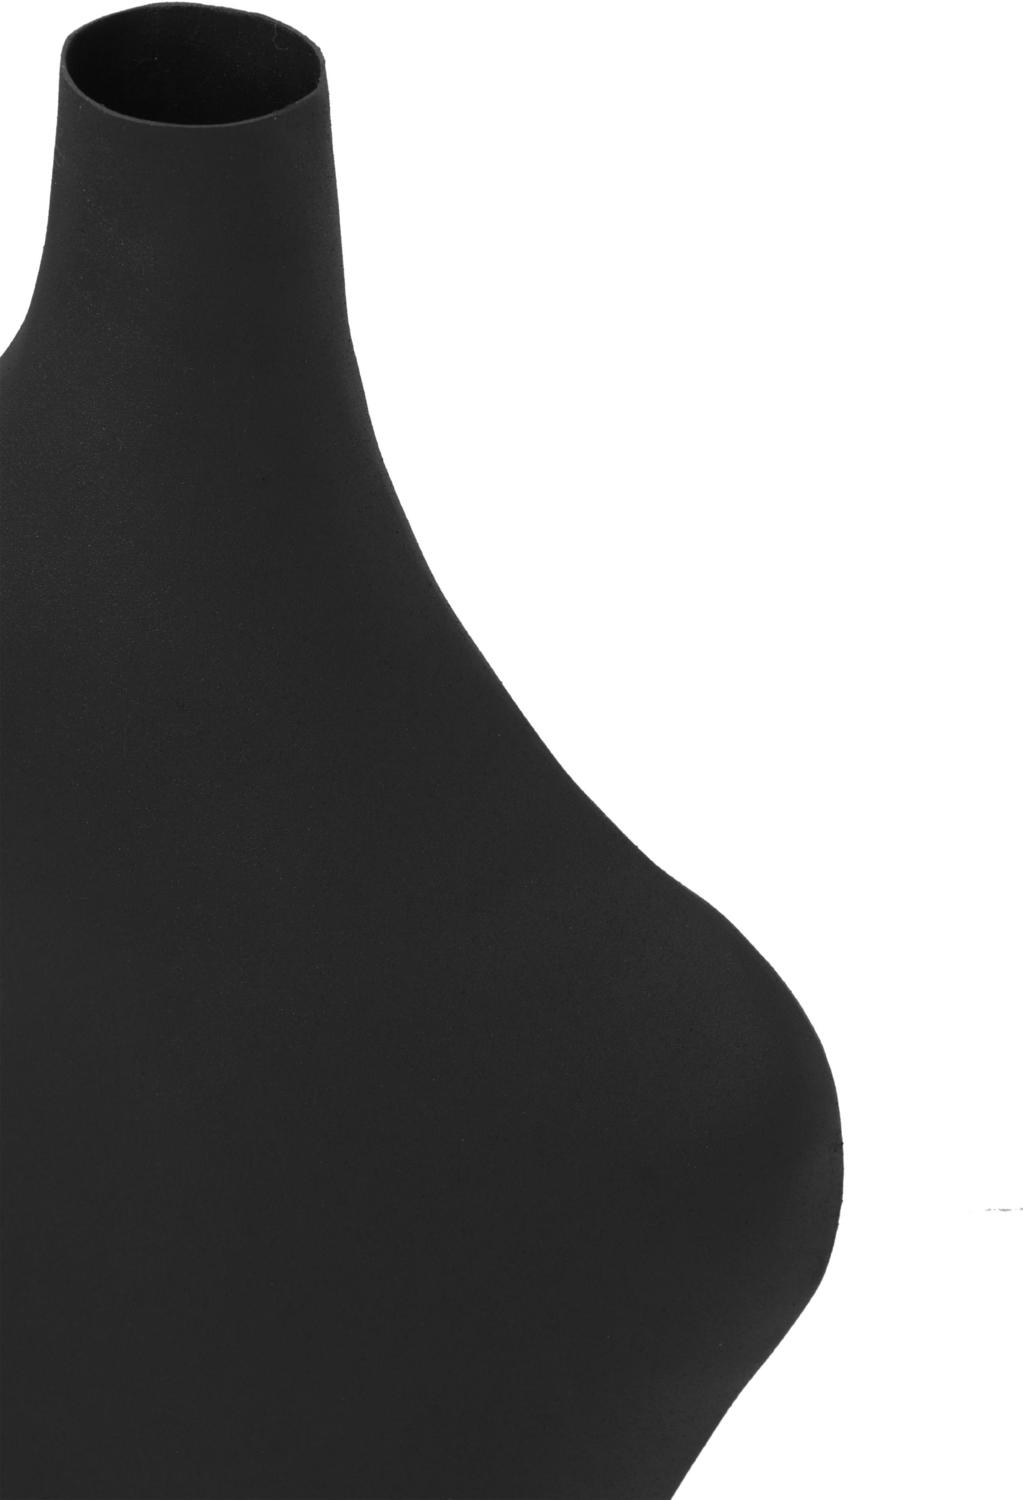 glassware tray Contemporary Design Furniture Vases Black